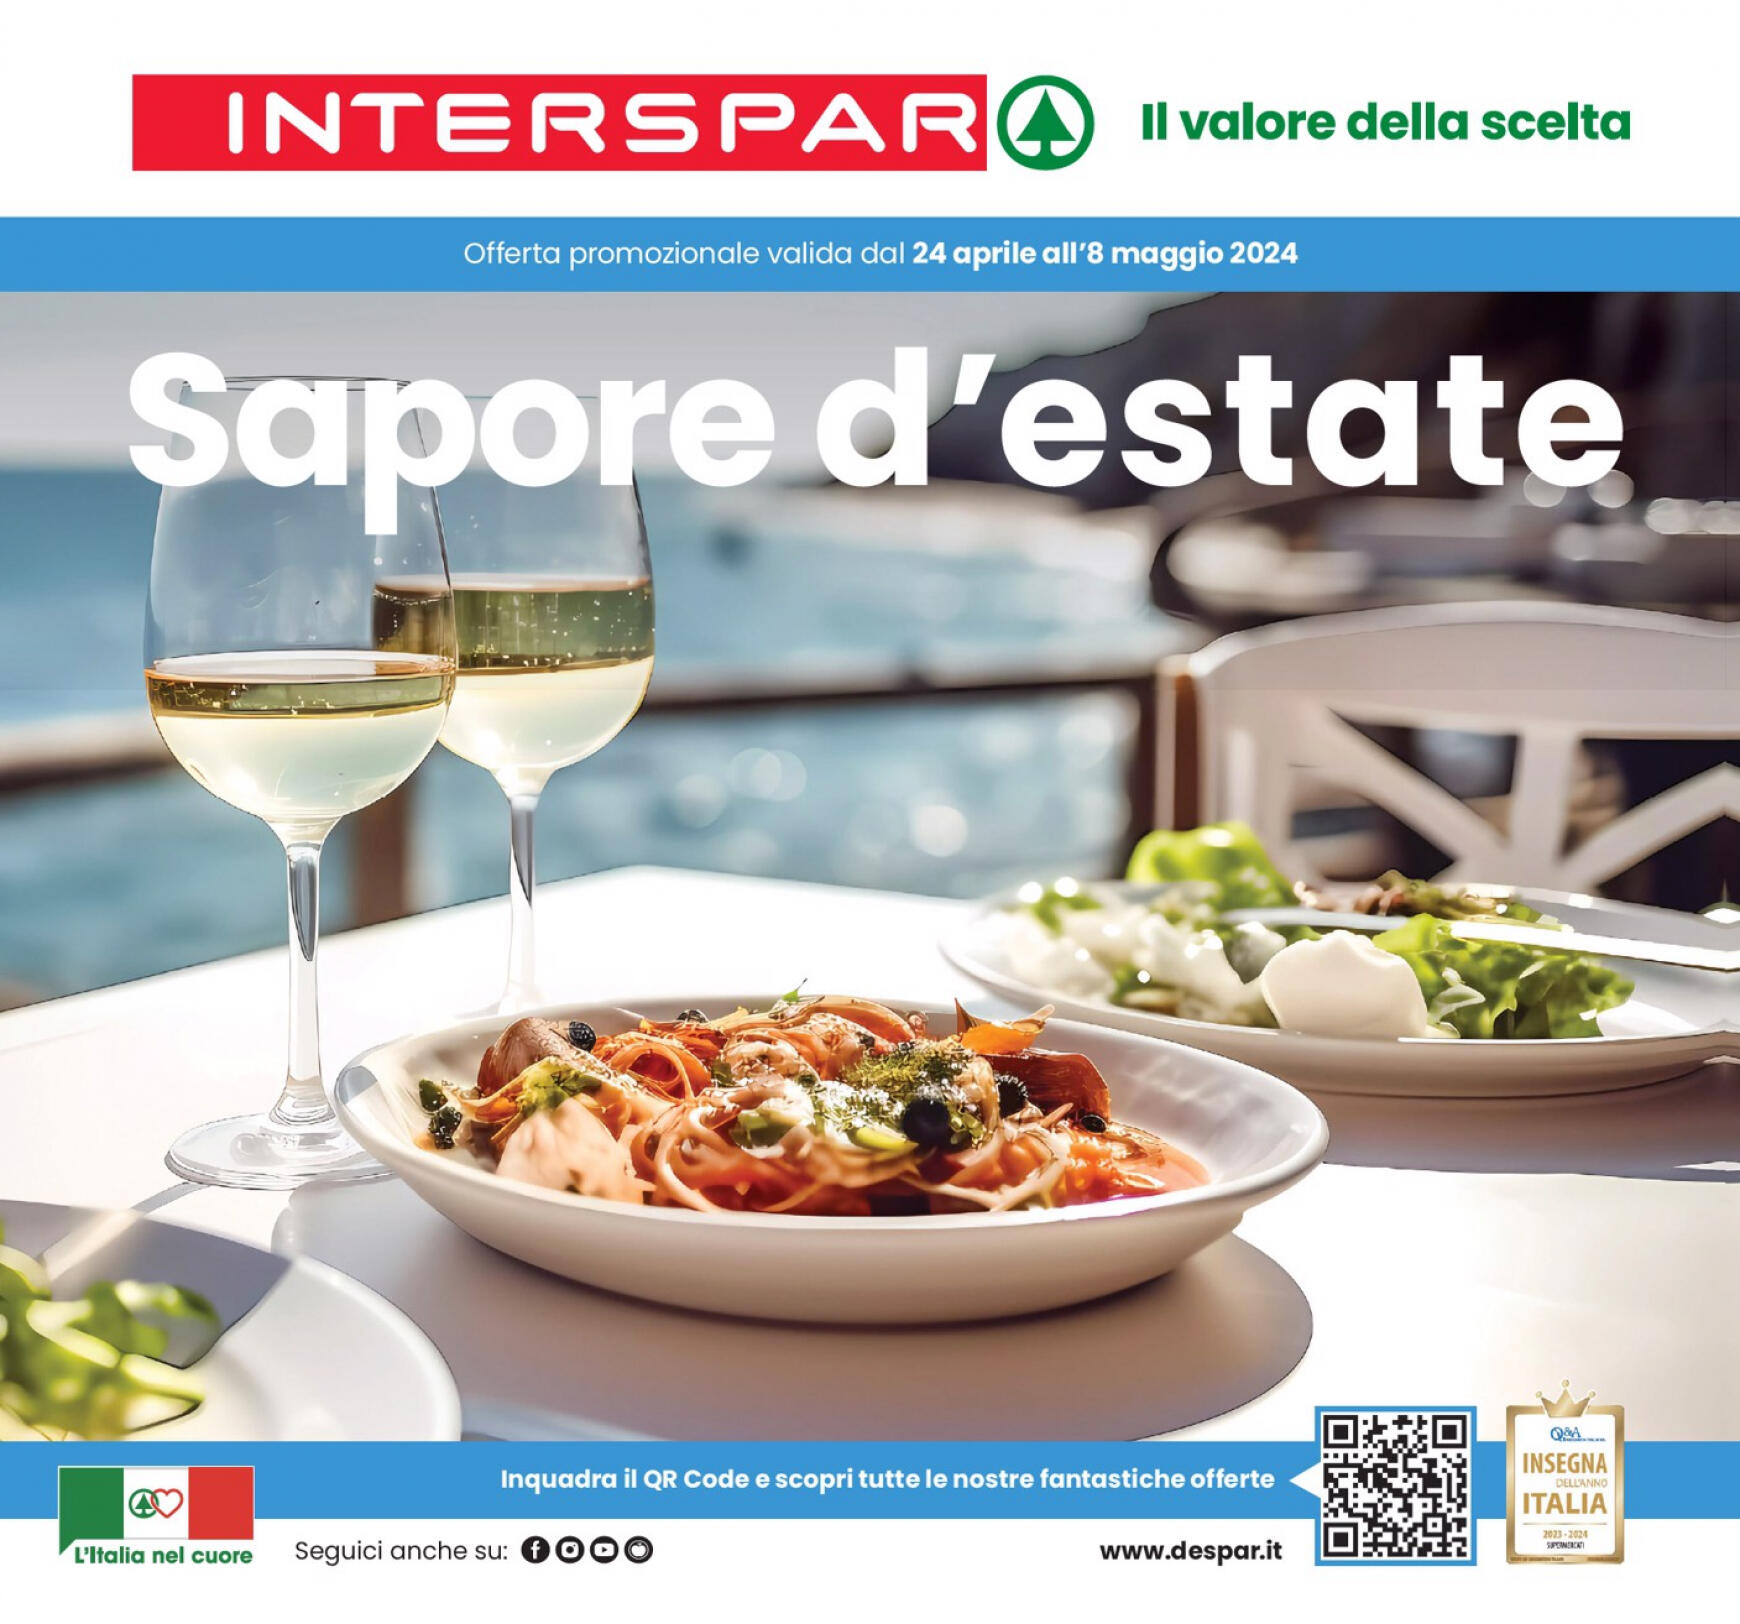 interspar - Nuovo volantino INTERSPAR - Sapore d'estate 24.04. - 08.05. - page: 1